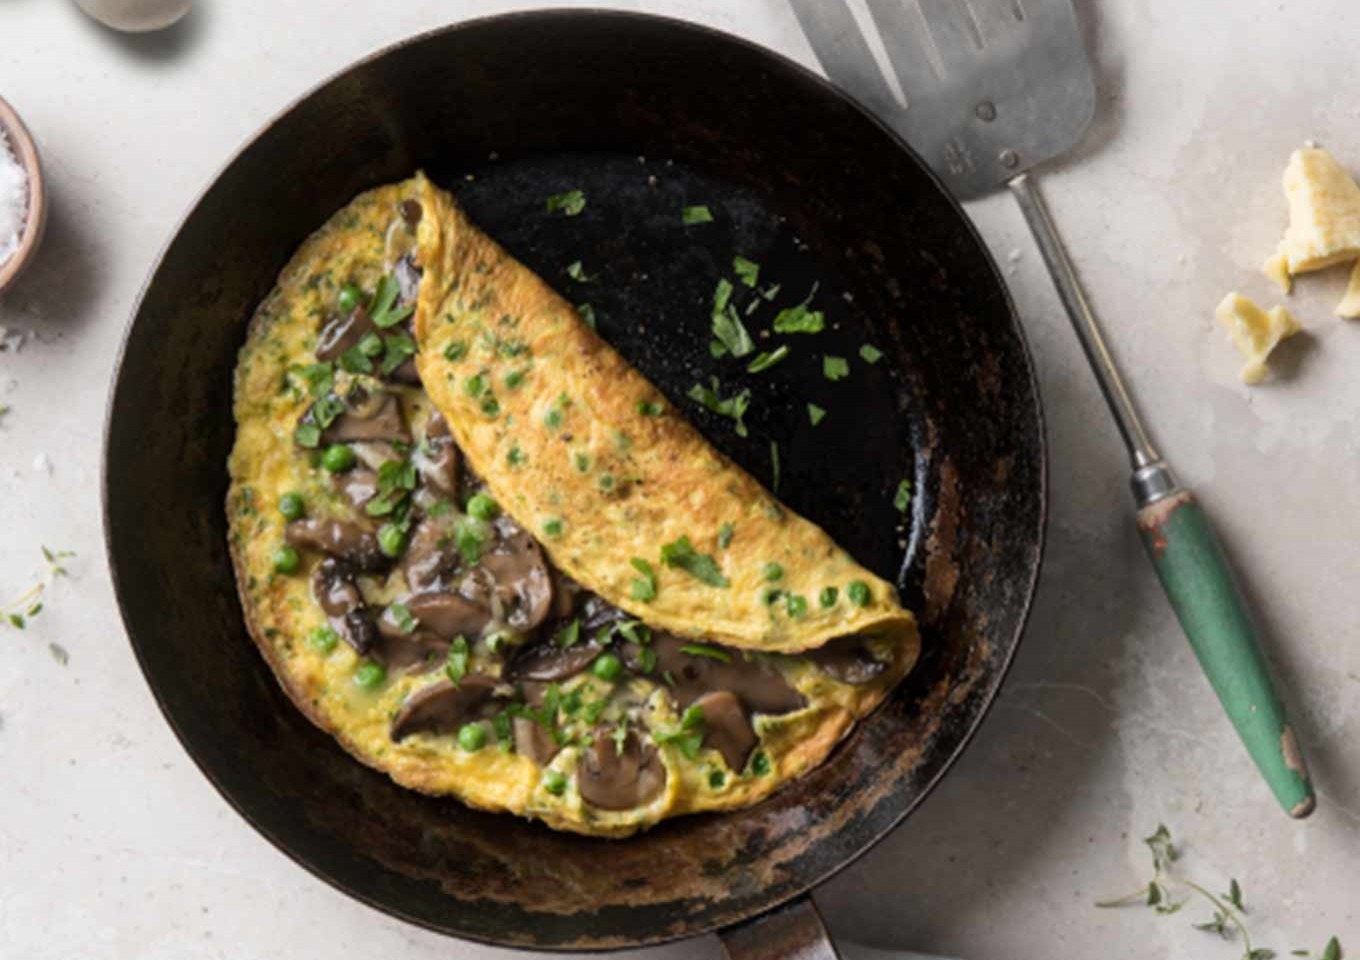 Cheesy Mushroom, Pea & Herb Omelette - meal time emergency